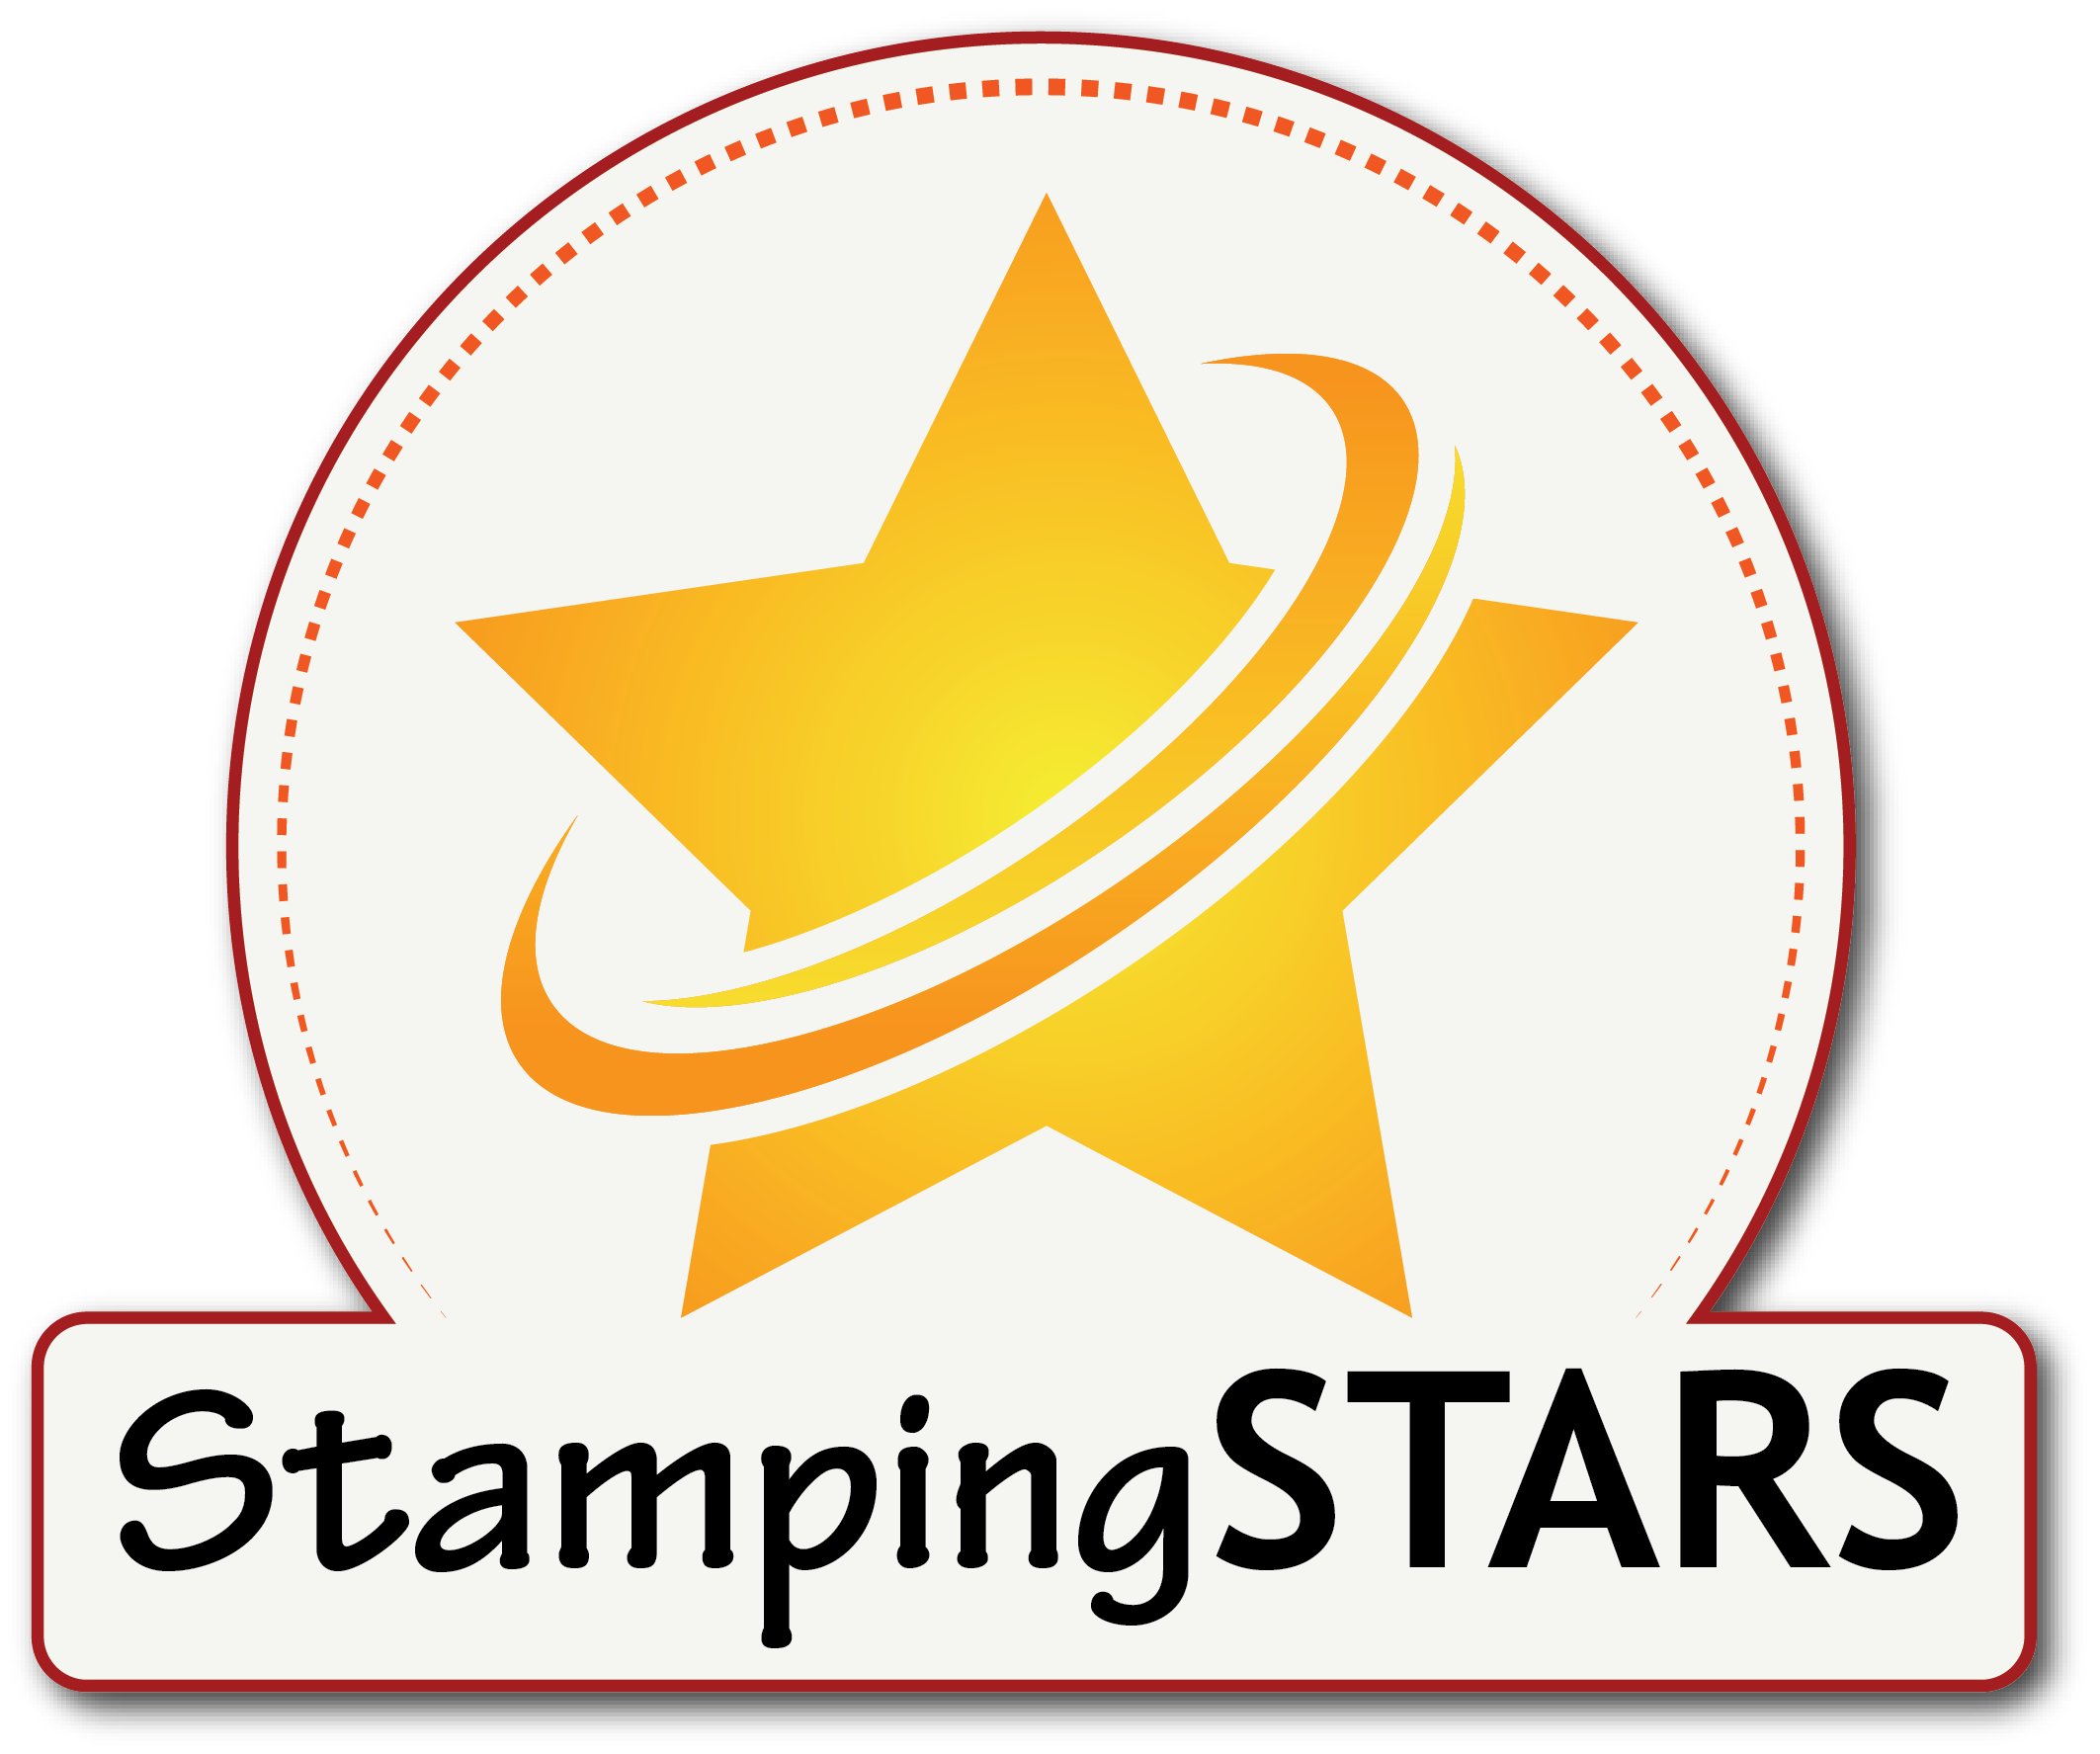 StampingSTARS